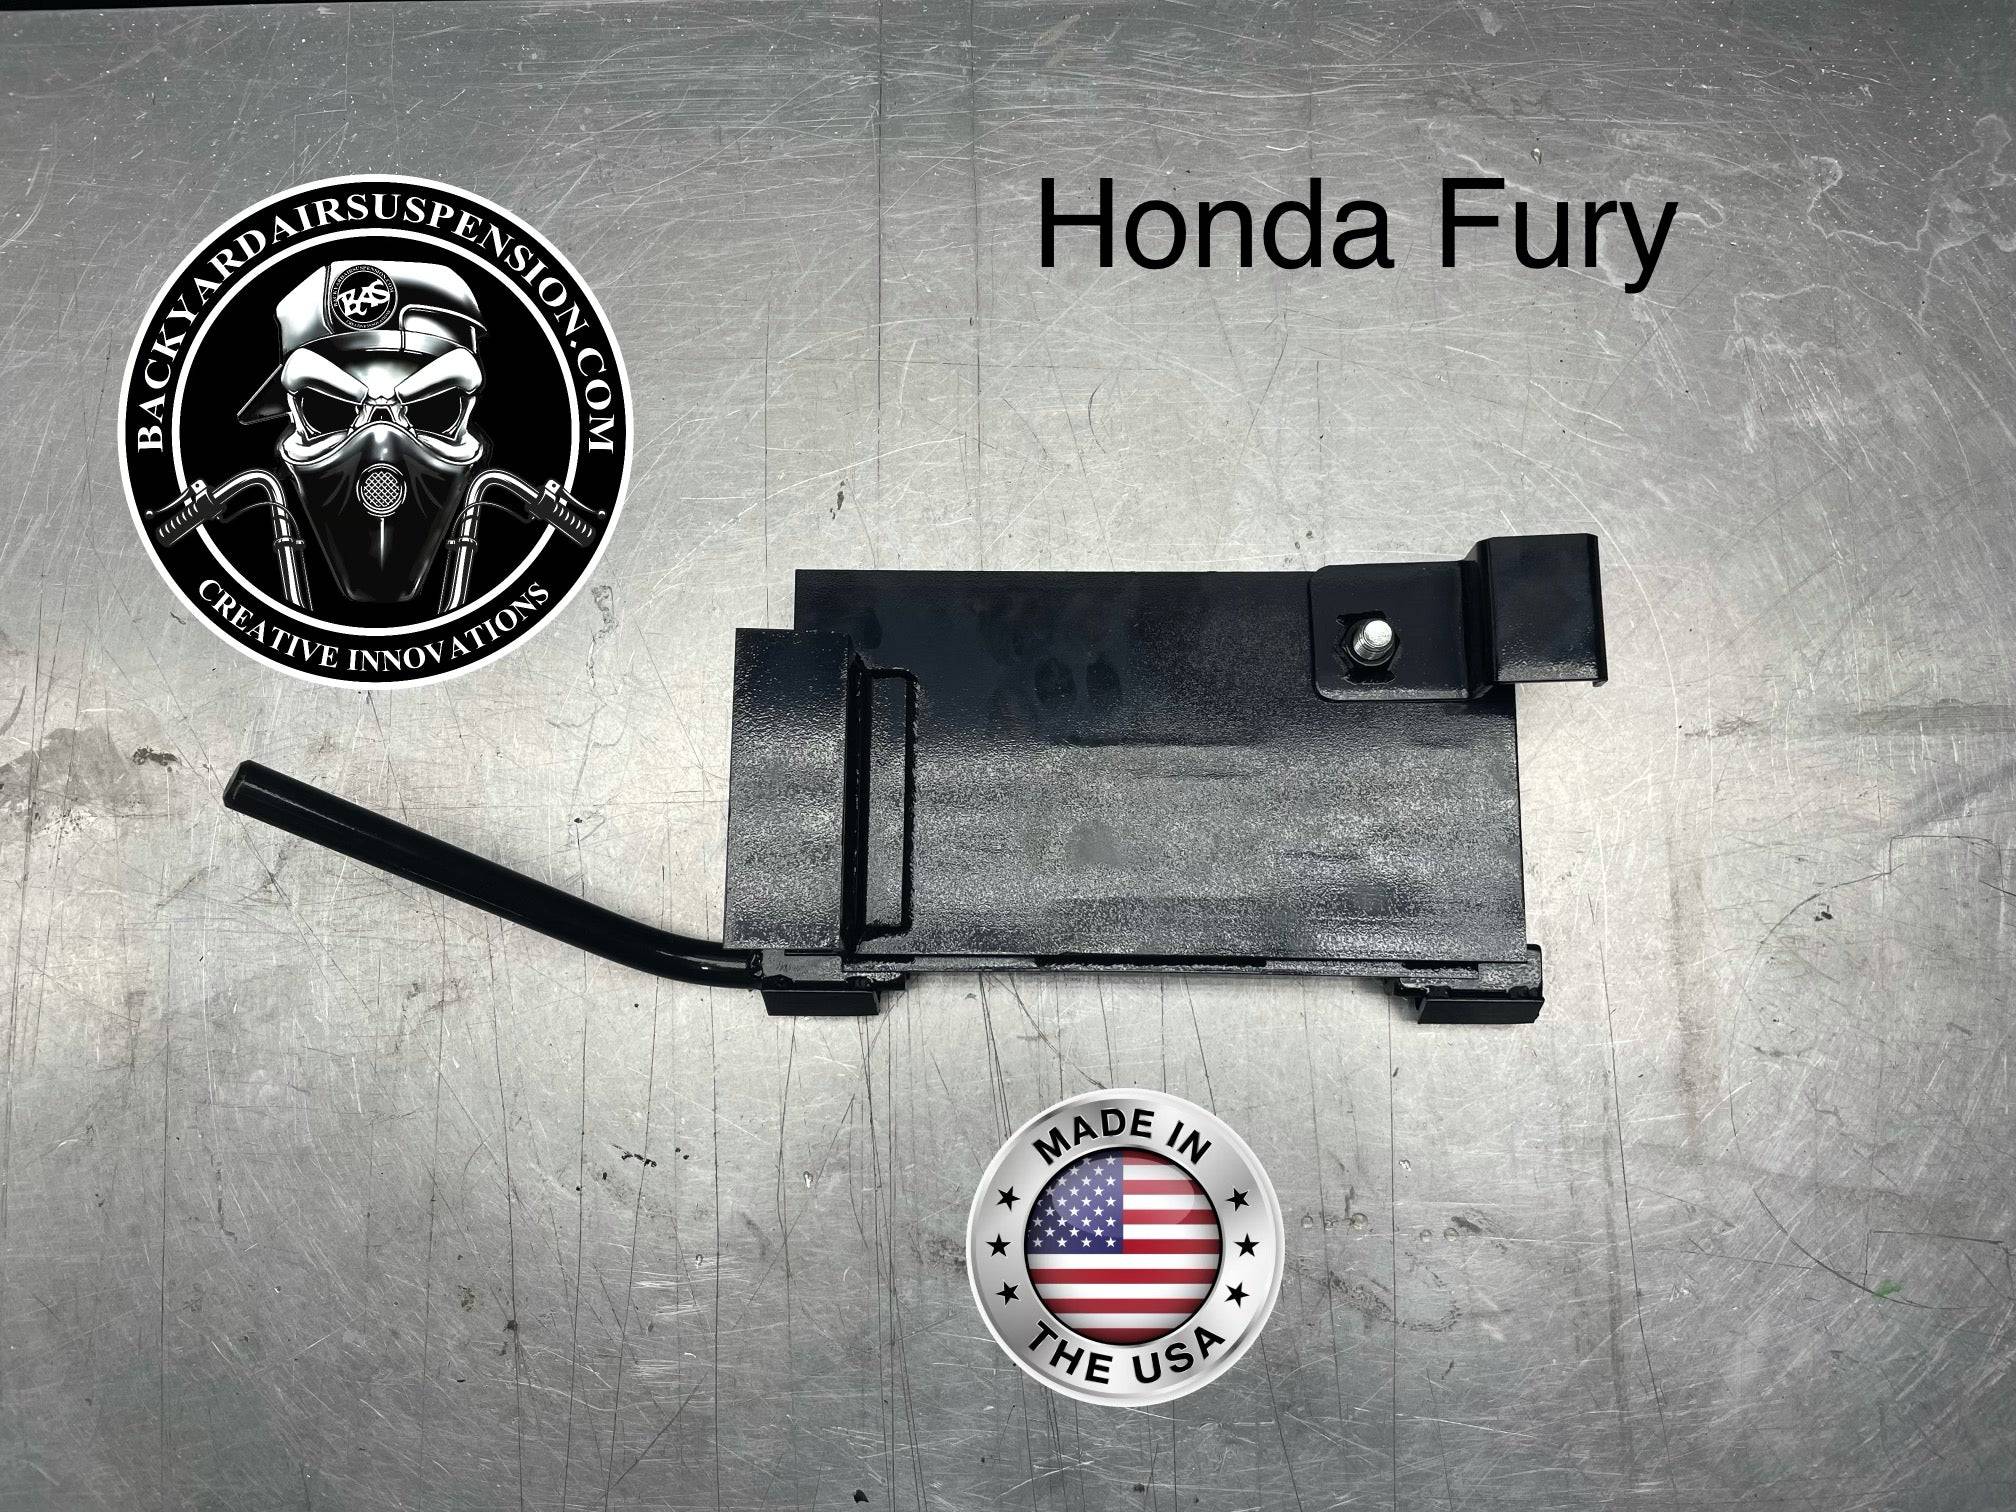 Honda Fury Manual Center Stand - Backyard Air Suspension & Innovations, LLC.